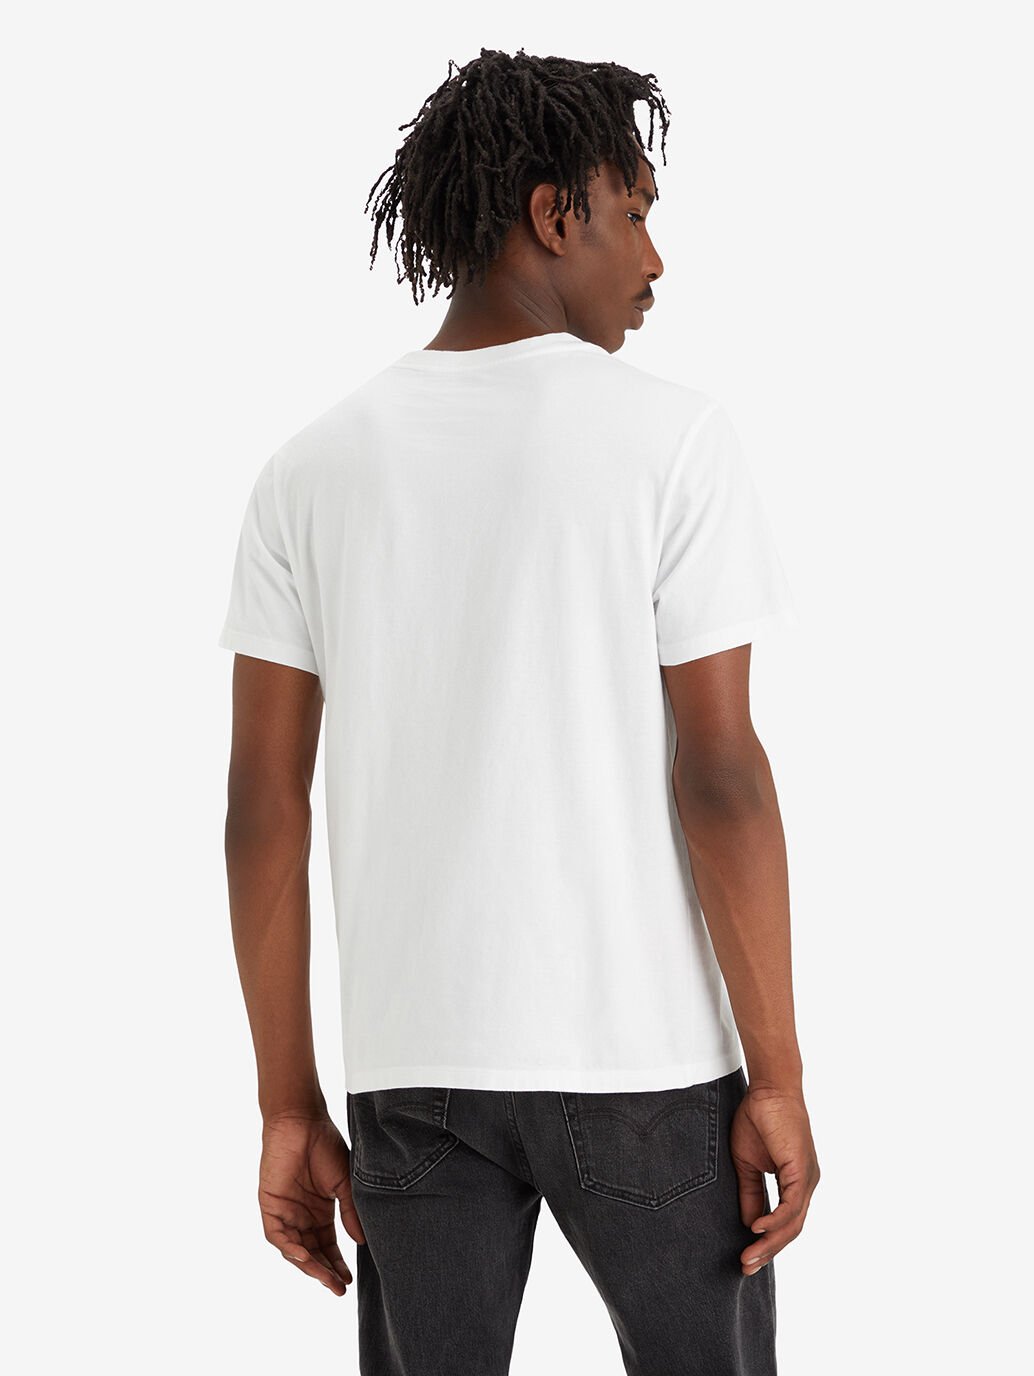 224911510 Men's Classic Graphic T-Shirt | Western Wear Whiteplus